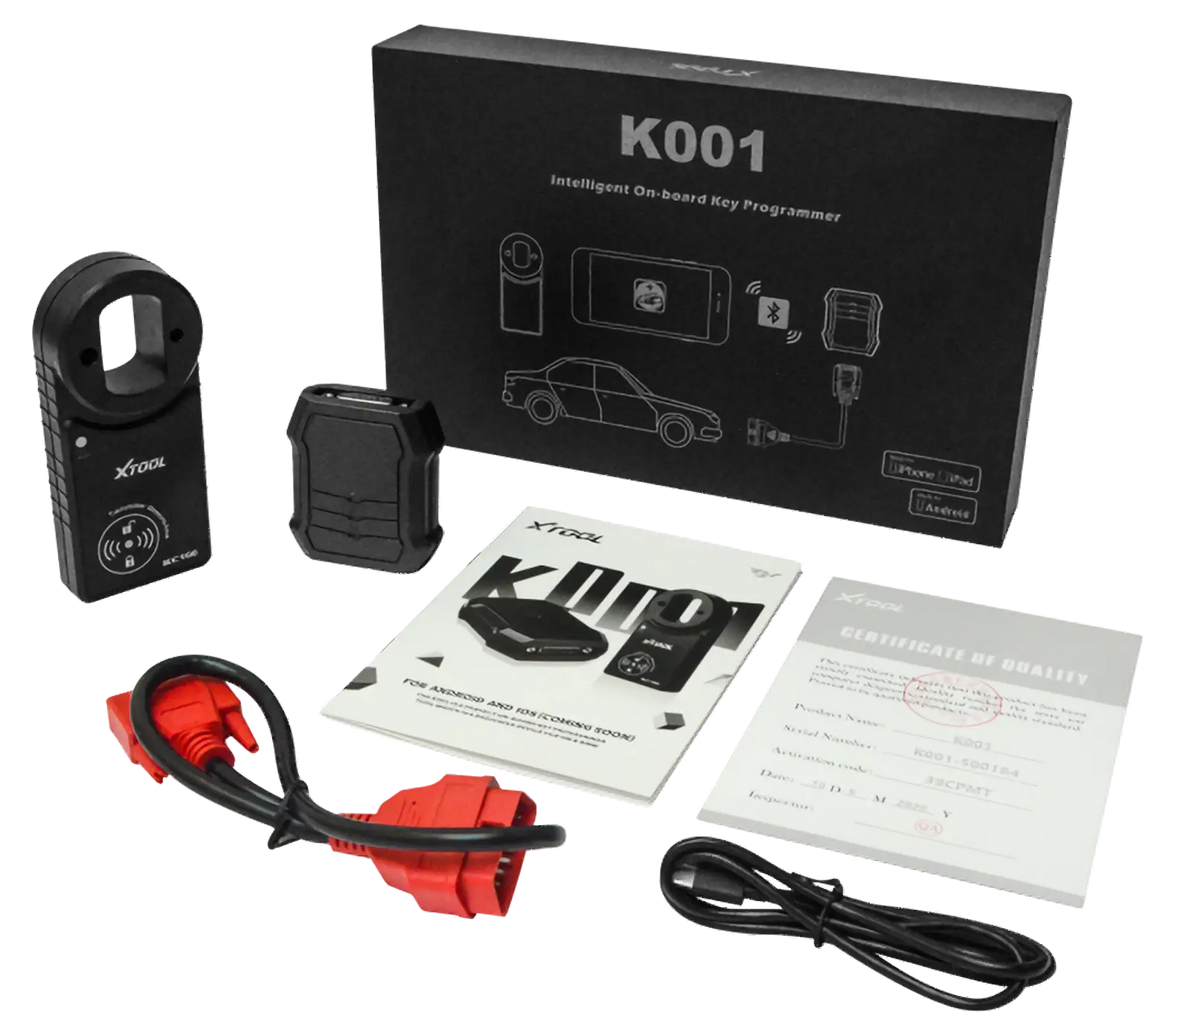 Xtool K001 Intelligent On-board Key Programmer